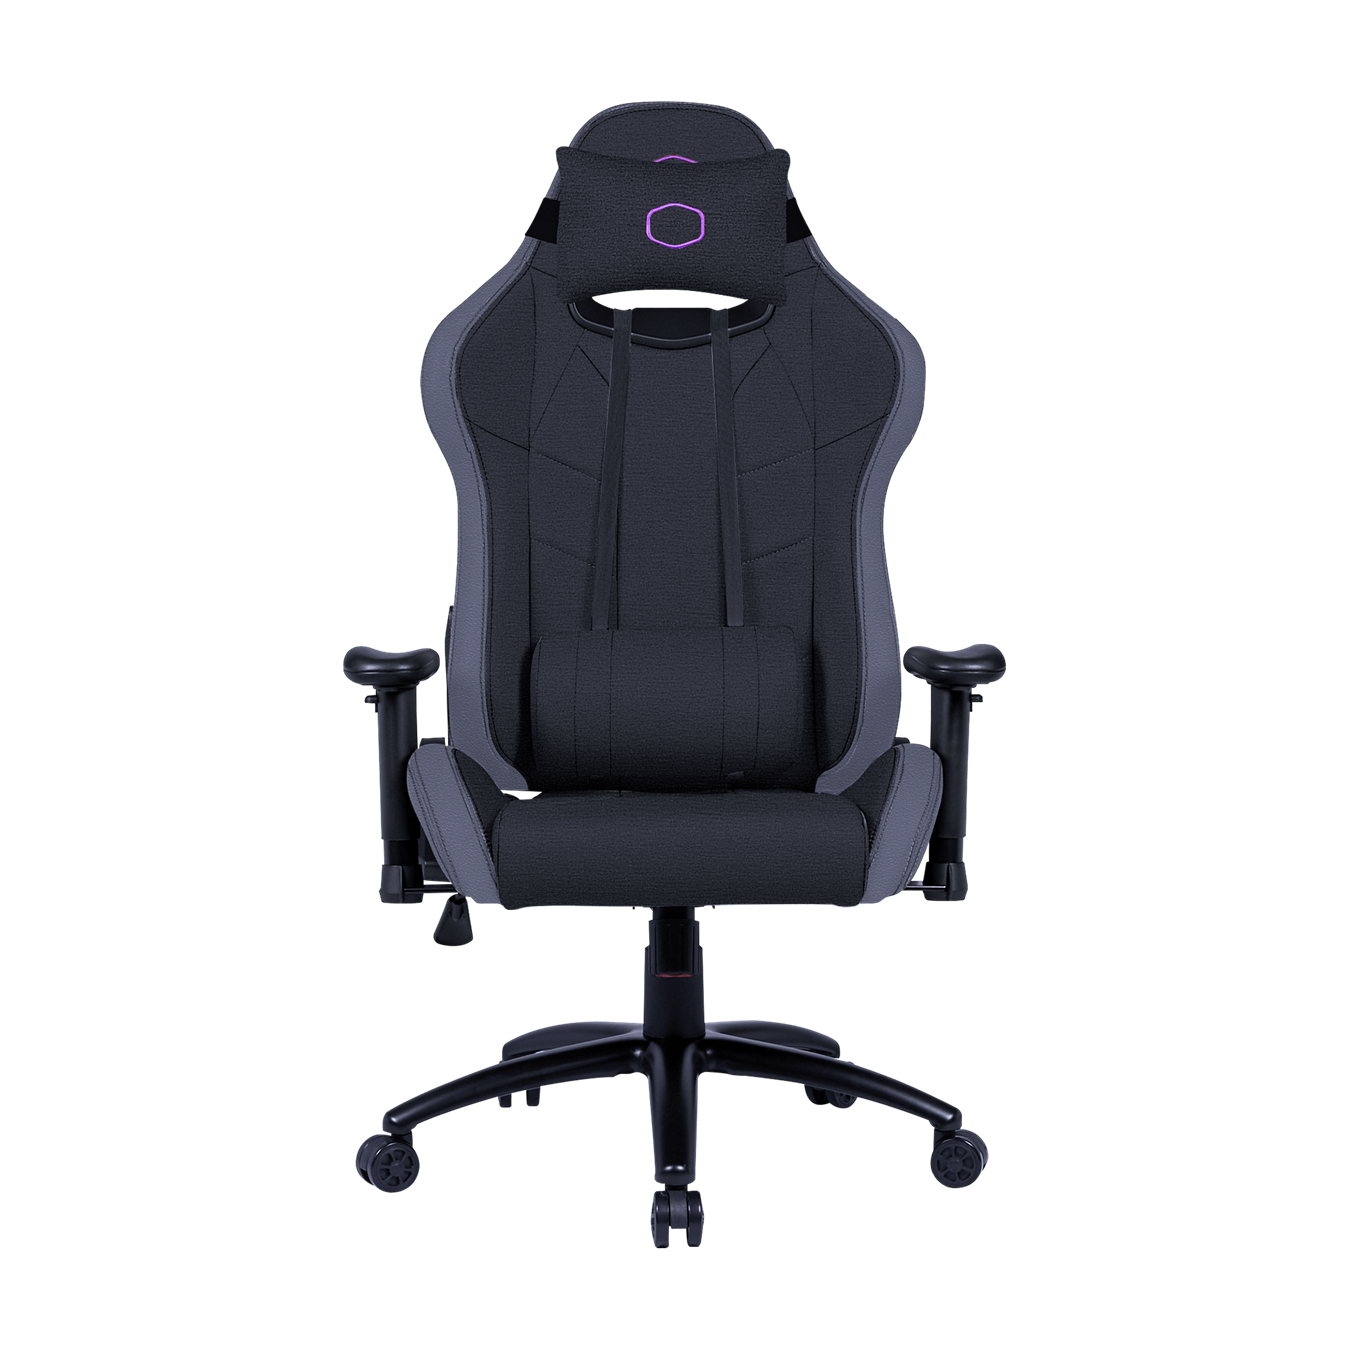 Cooler Master CMI-GCR2C-BK CALIBER R2C Gaming Chair. Black